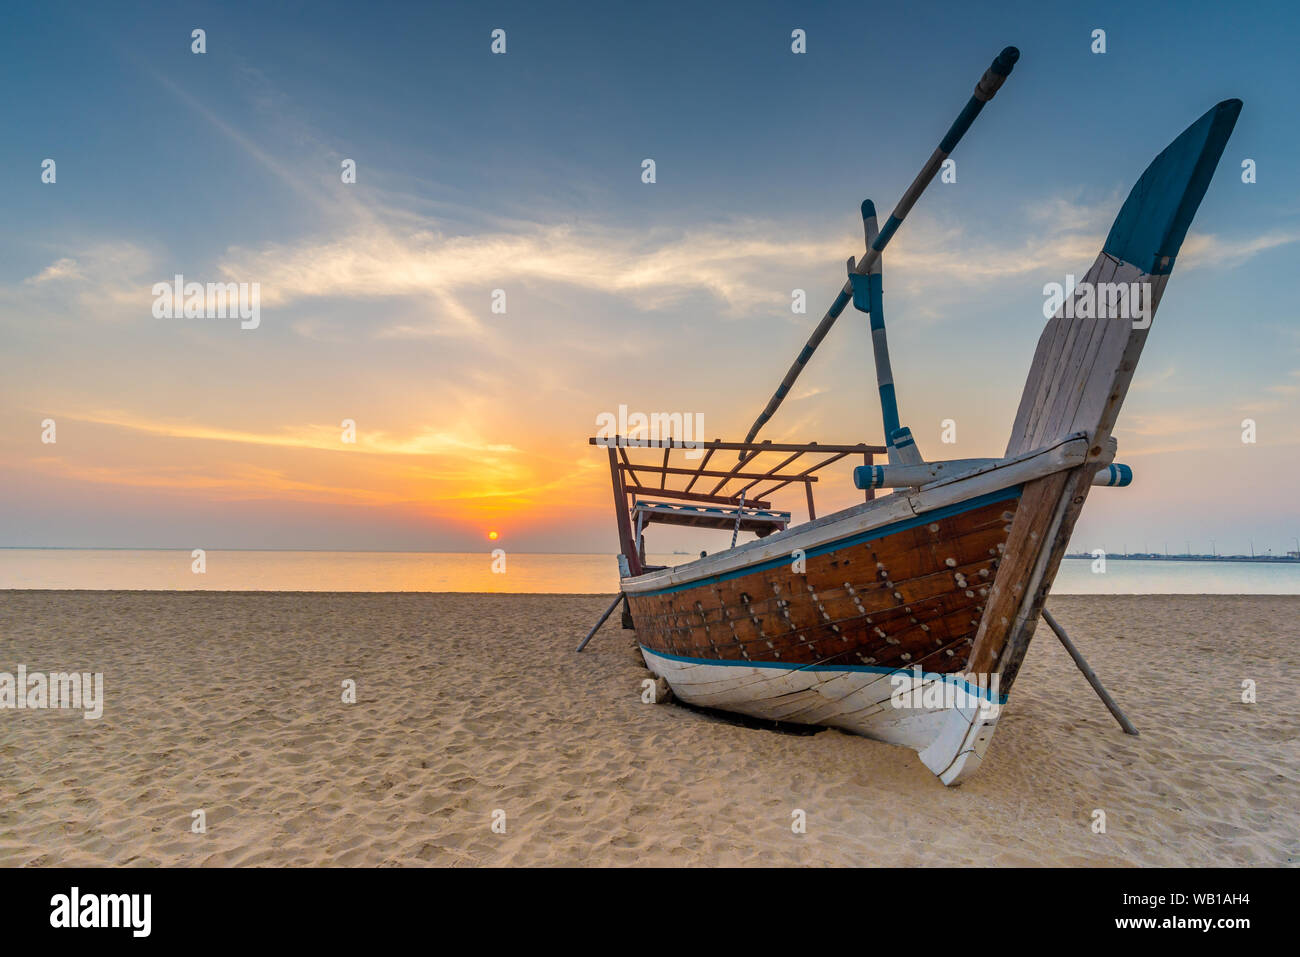 Traditional Arabian boat on a beach. Taken early morning on a beach near Al Wakrah, Qatar Stock Photo